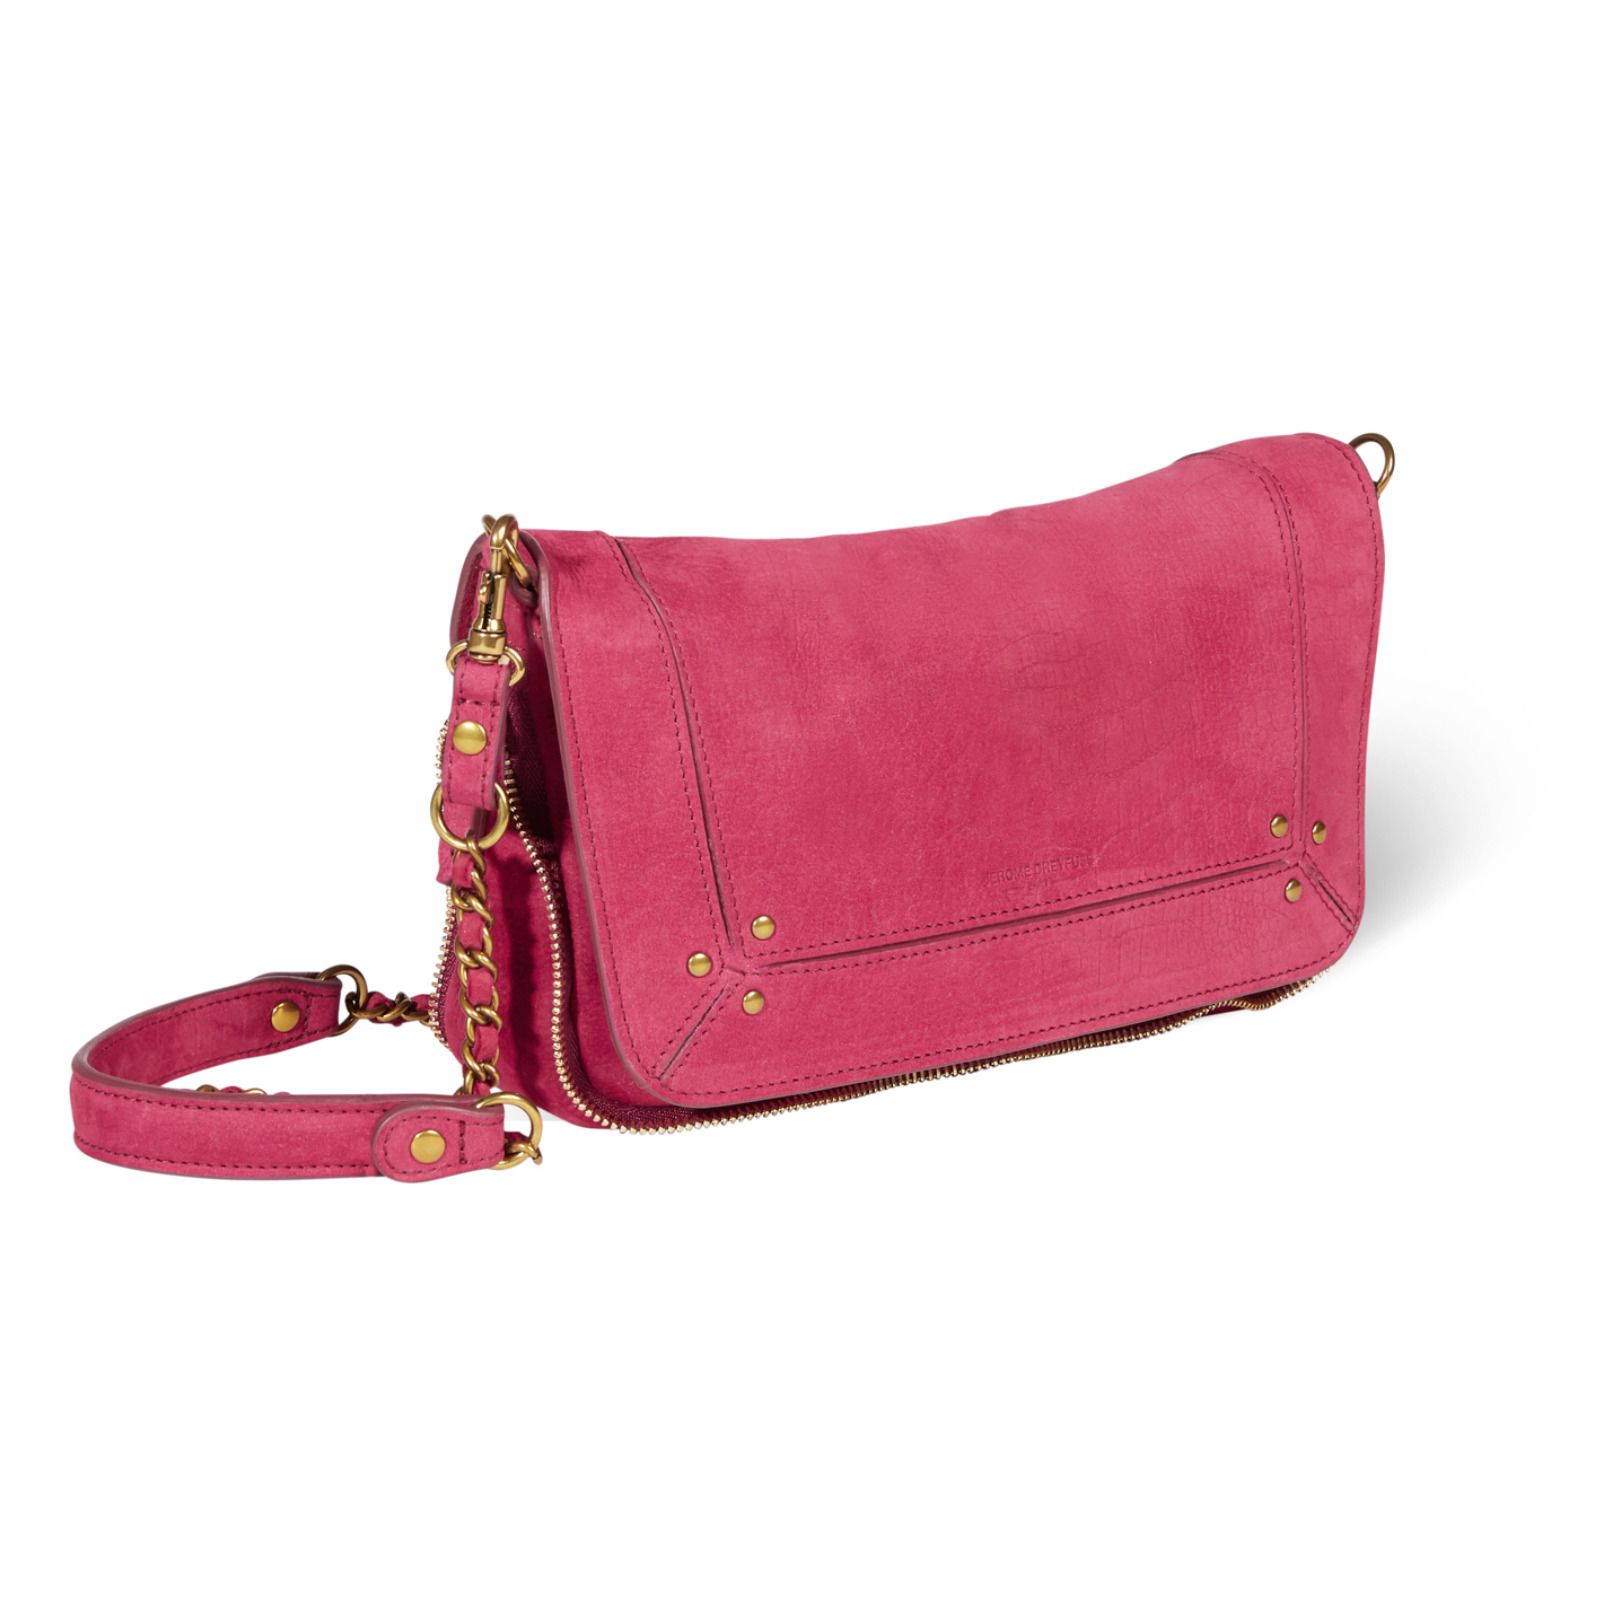 Dreyfuss - Bullcalf Leather Handbag - S - red | Smallable